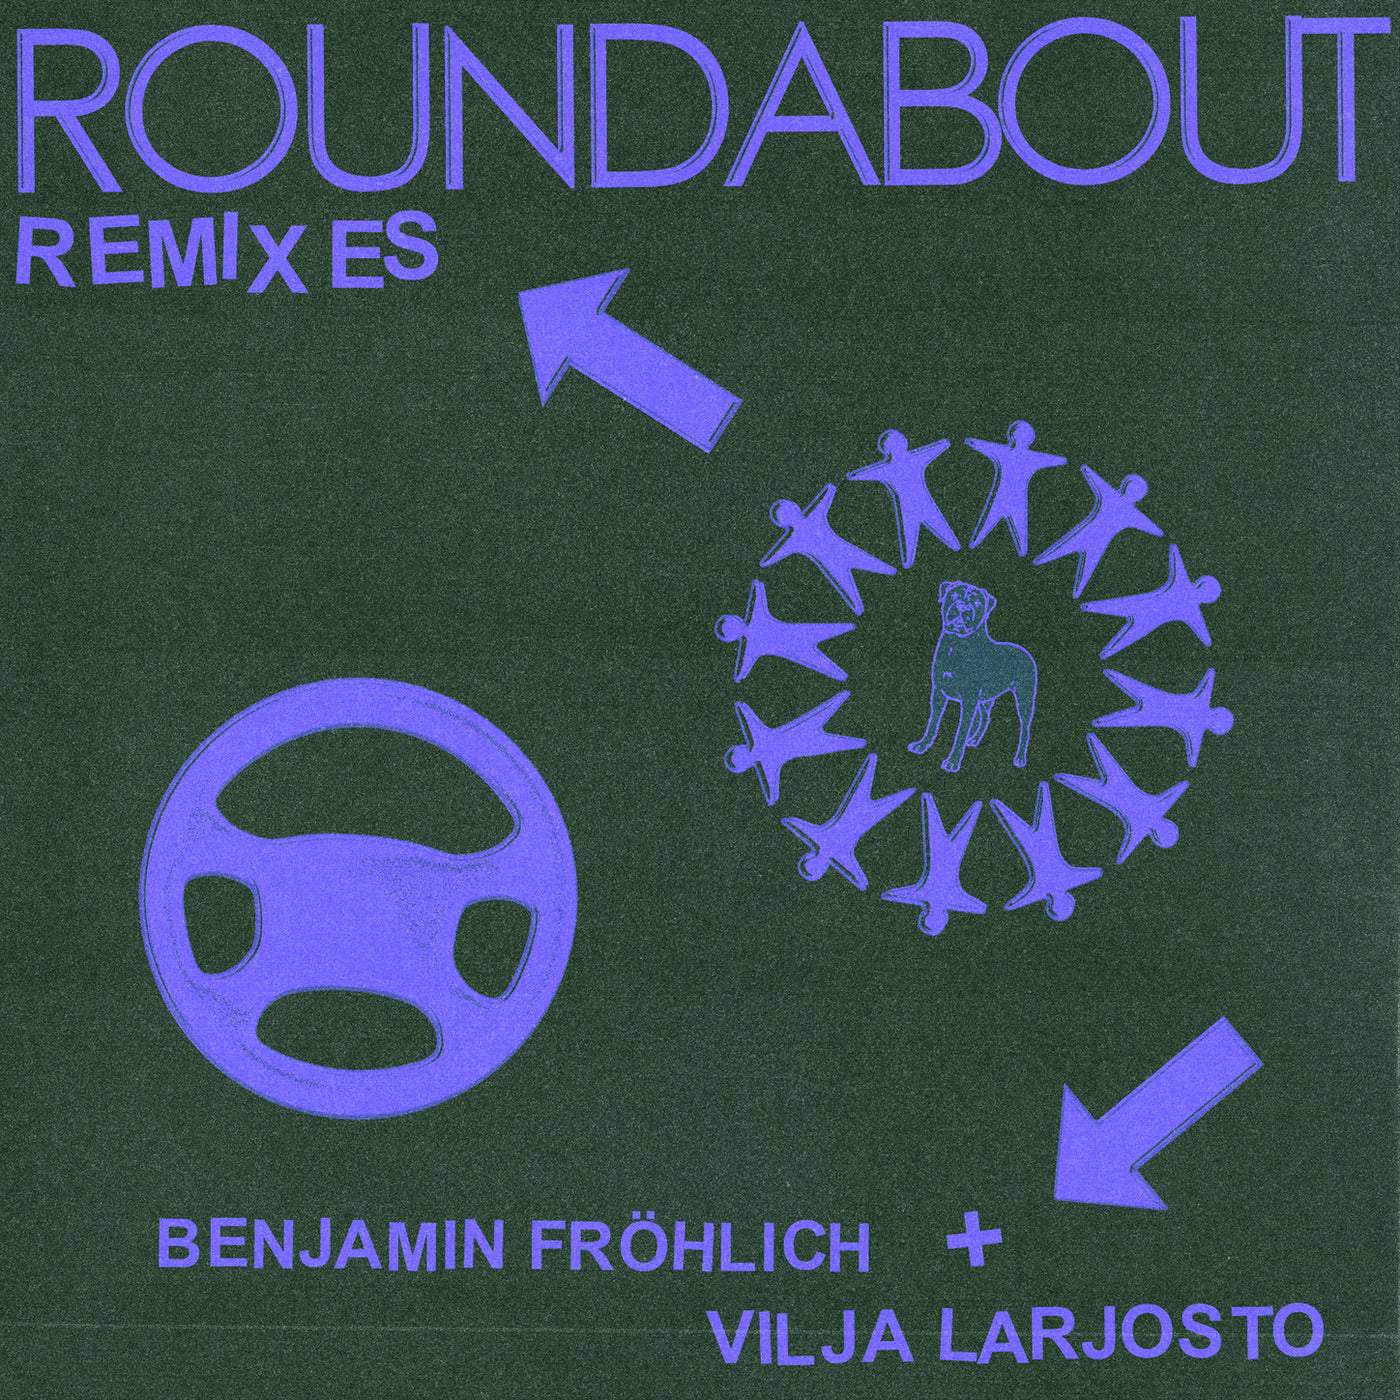 Download Vilja Larjosto, Benjamin Fröhlich - Roundabout Remixes on Electrobuzz